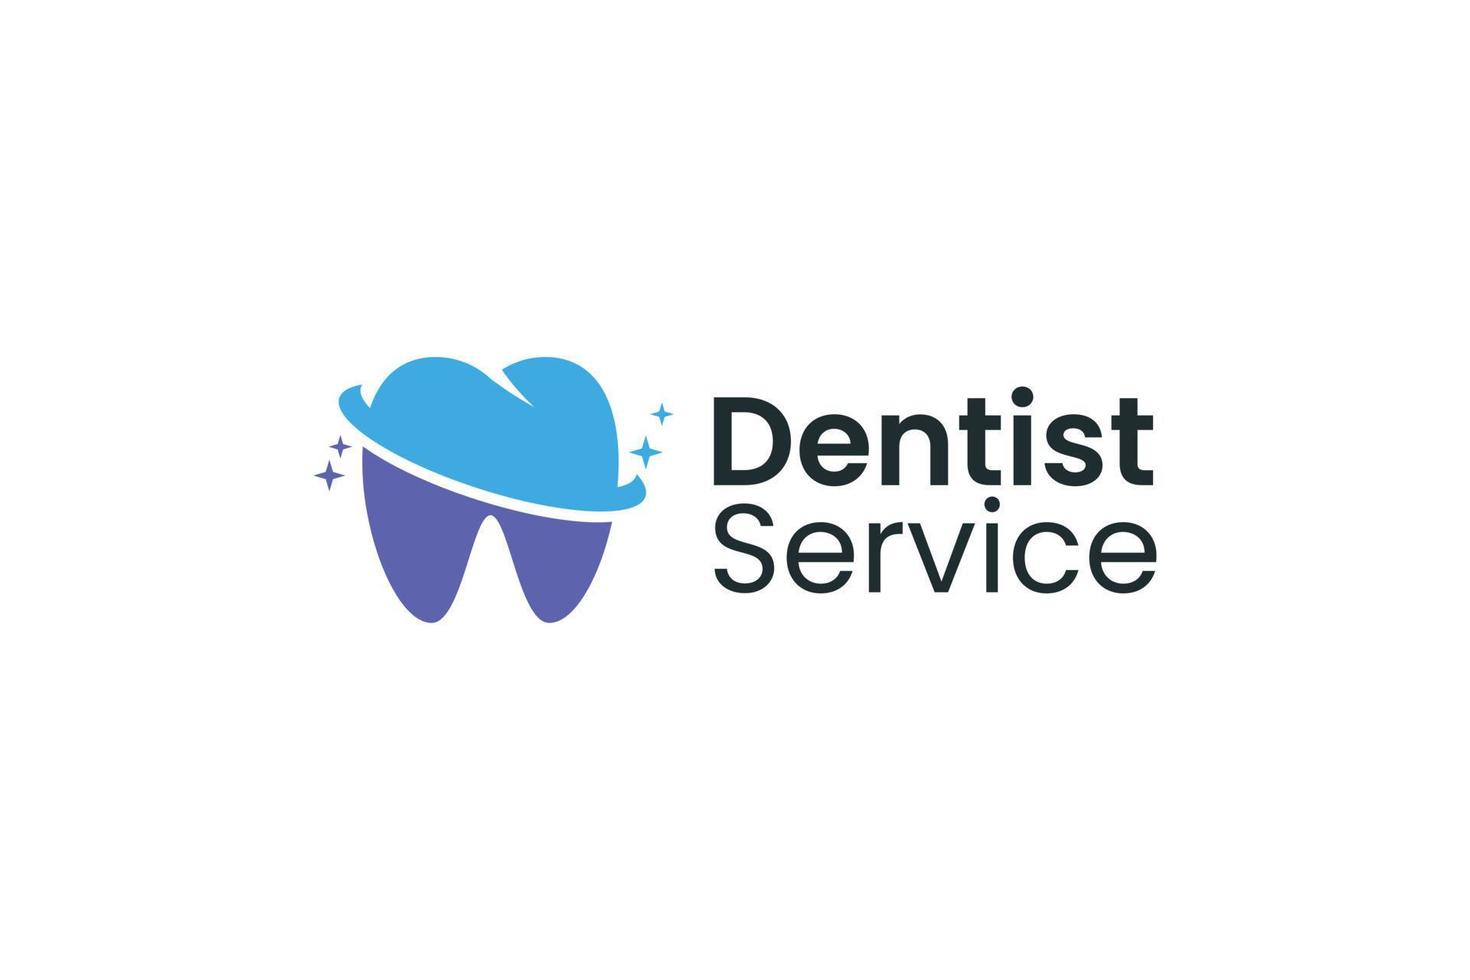 vetor de design de logotipo ortodôntico de dente de serviço de dentista